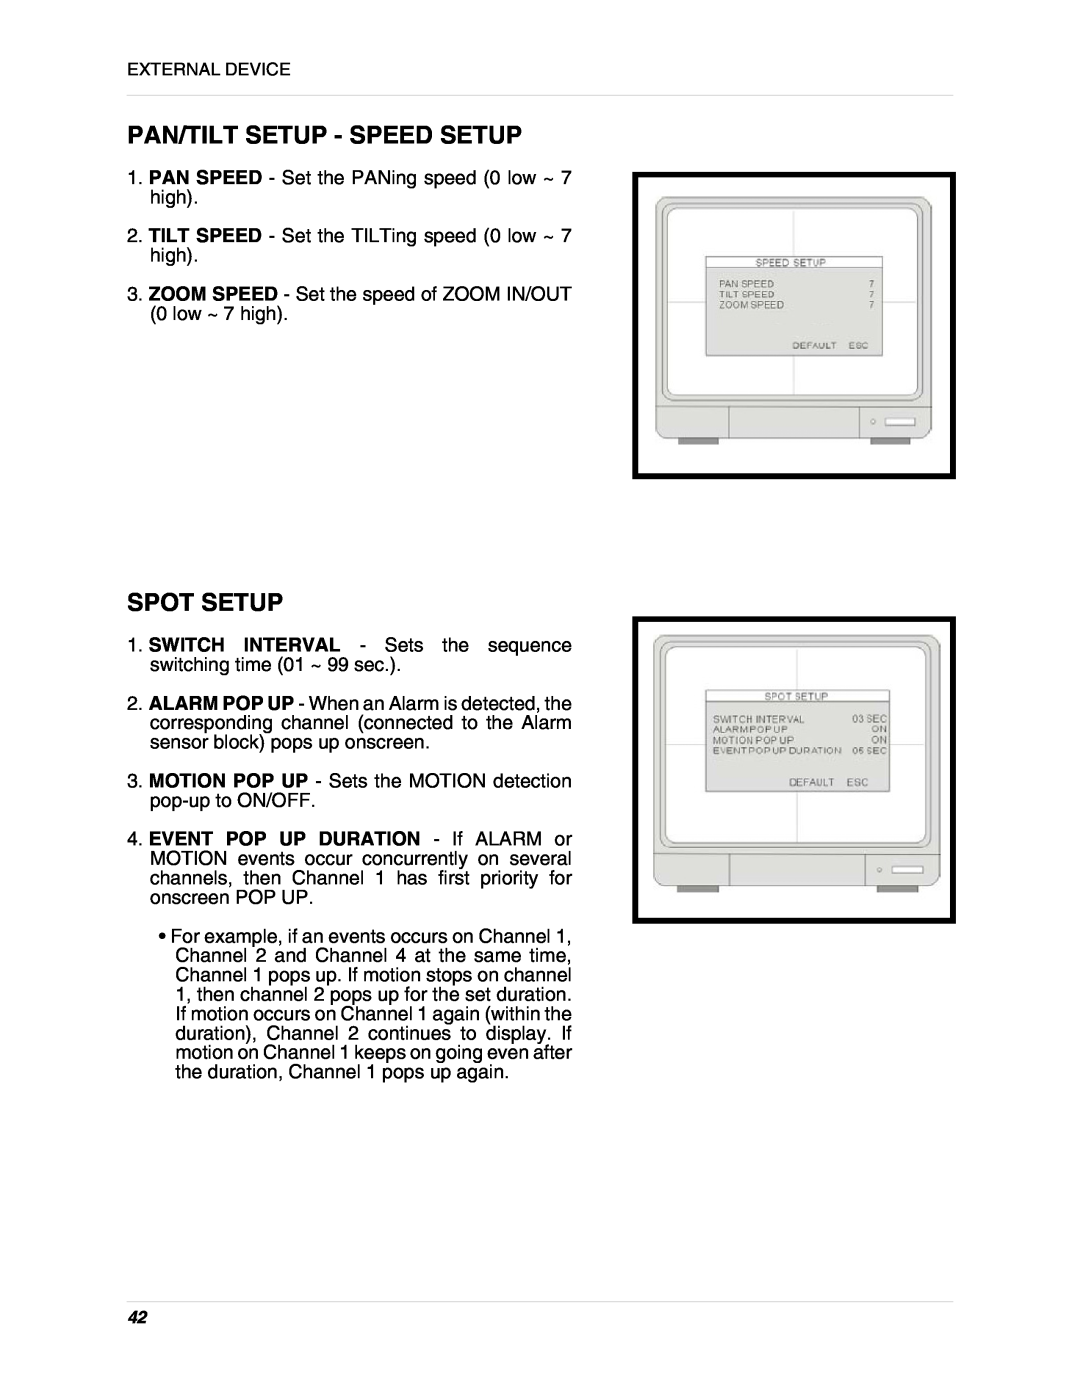 LOREX Technology L15D400 instruction manual Pan/Tilt Setup - Speed Setup, Spot Setup 